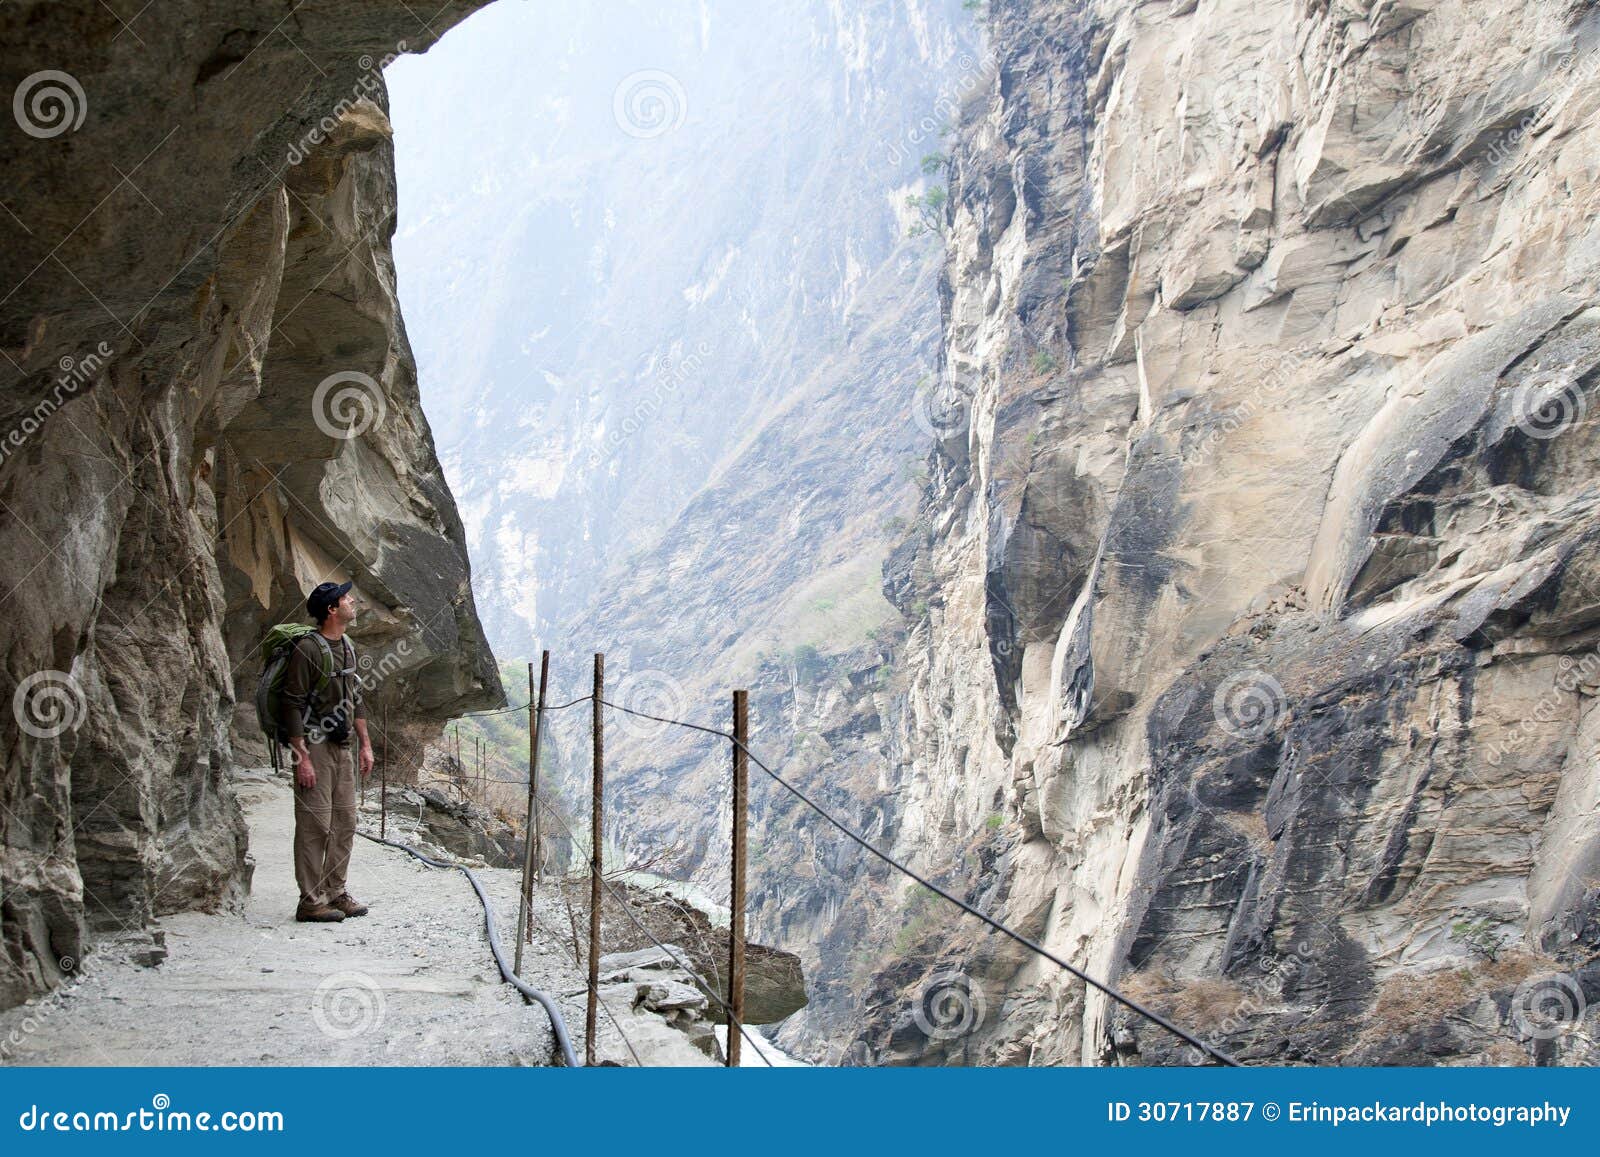 hiker on steep mountain path